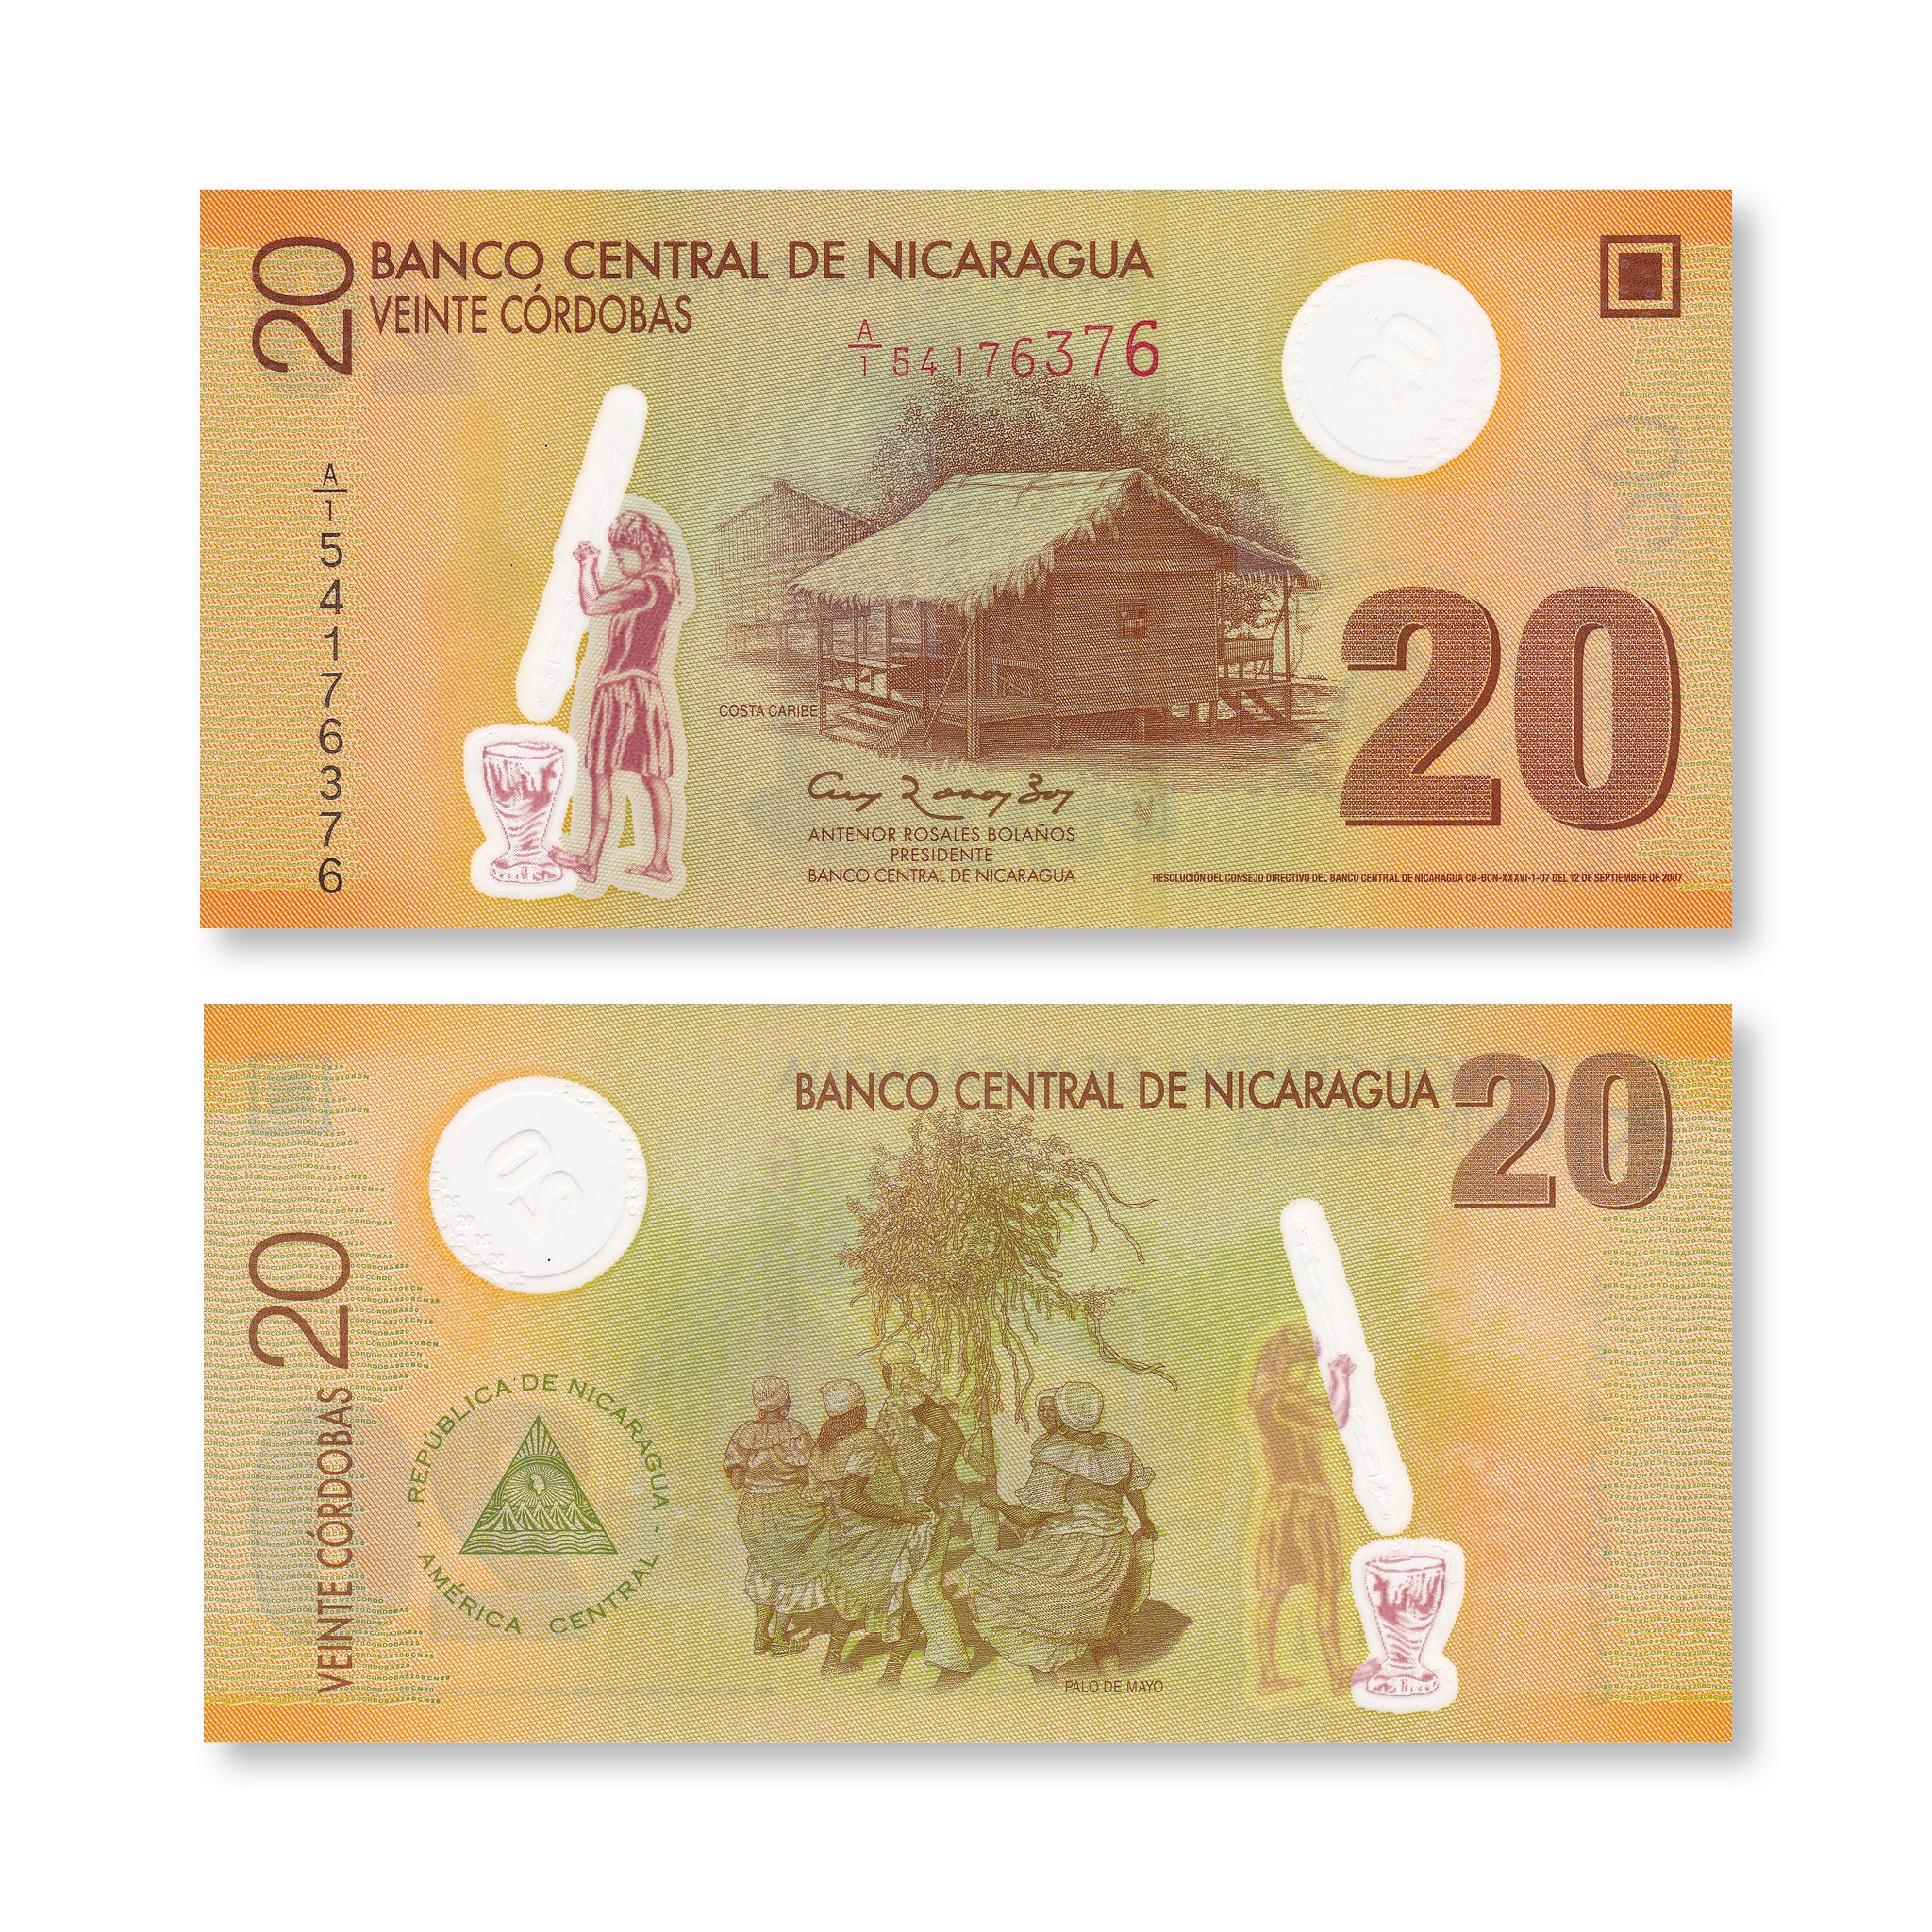 Nicaragua 20 Córdobas, 2007, B498b, P202b, UNC - Robert's World Money - World Banknotes